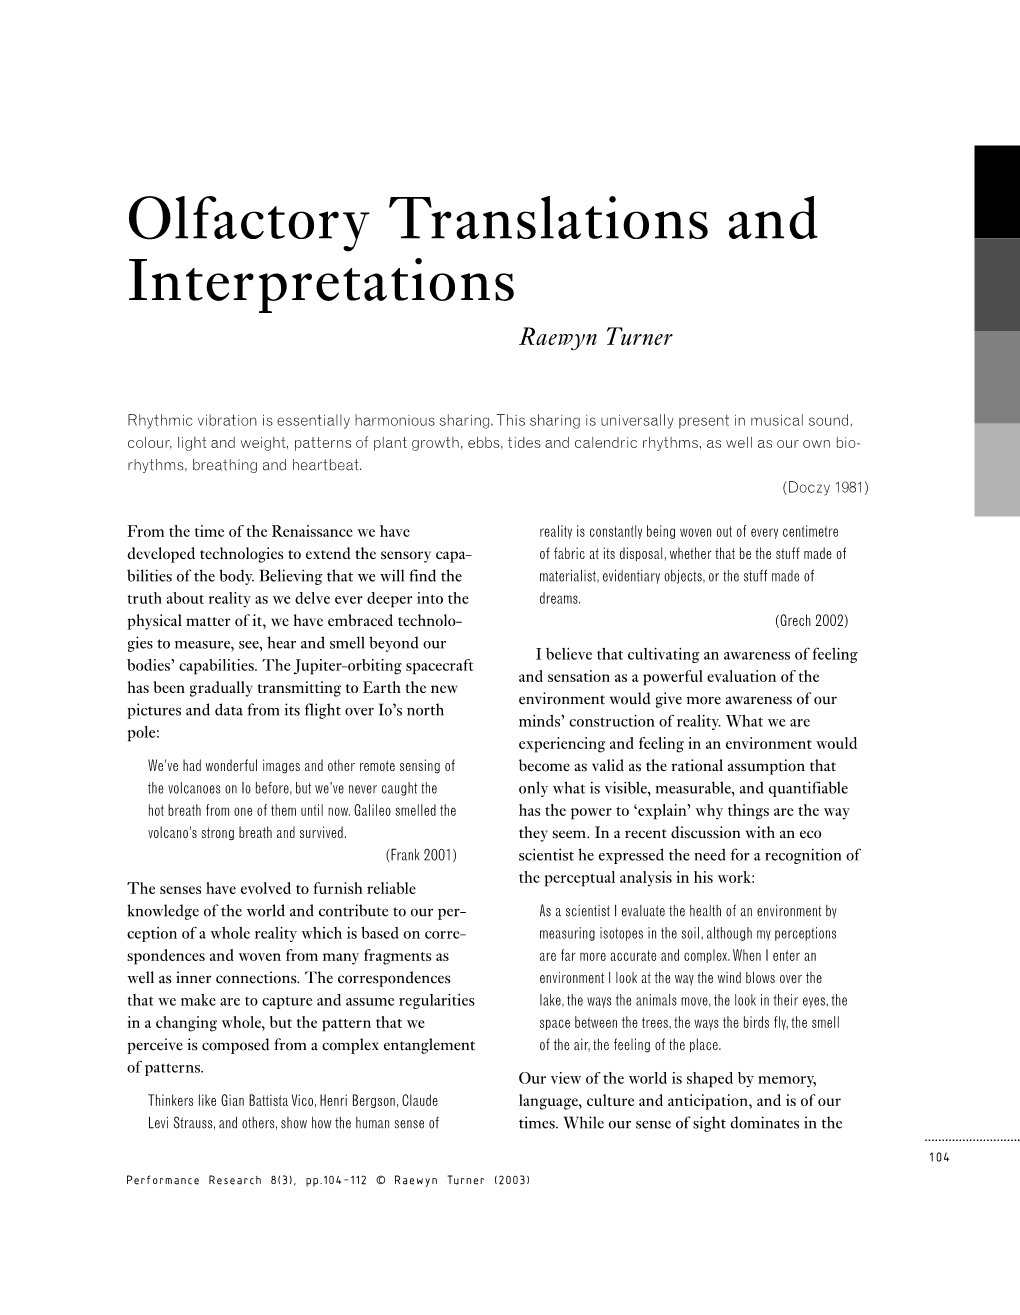 Example Olfactory Translations and Interpretations